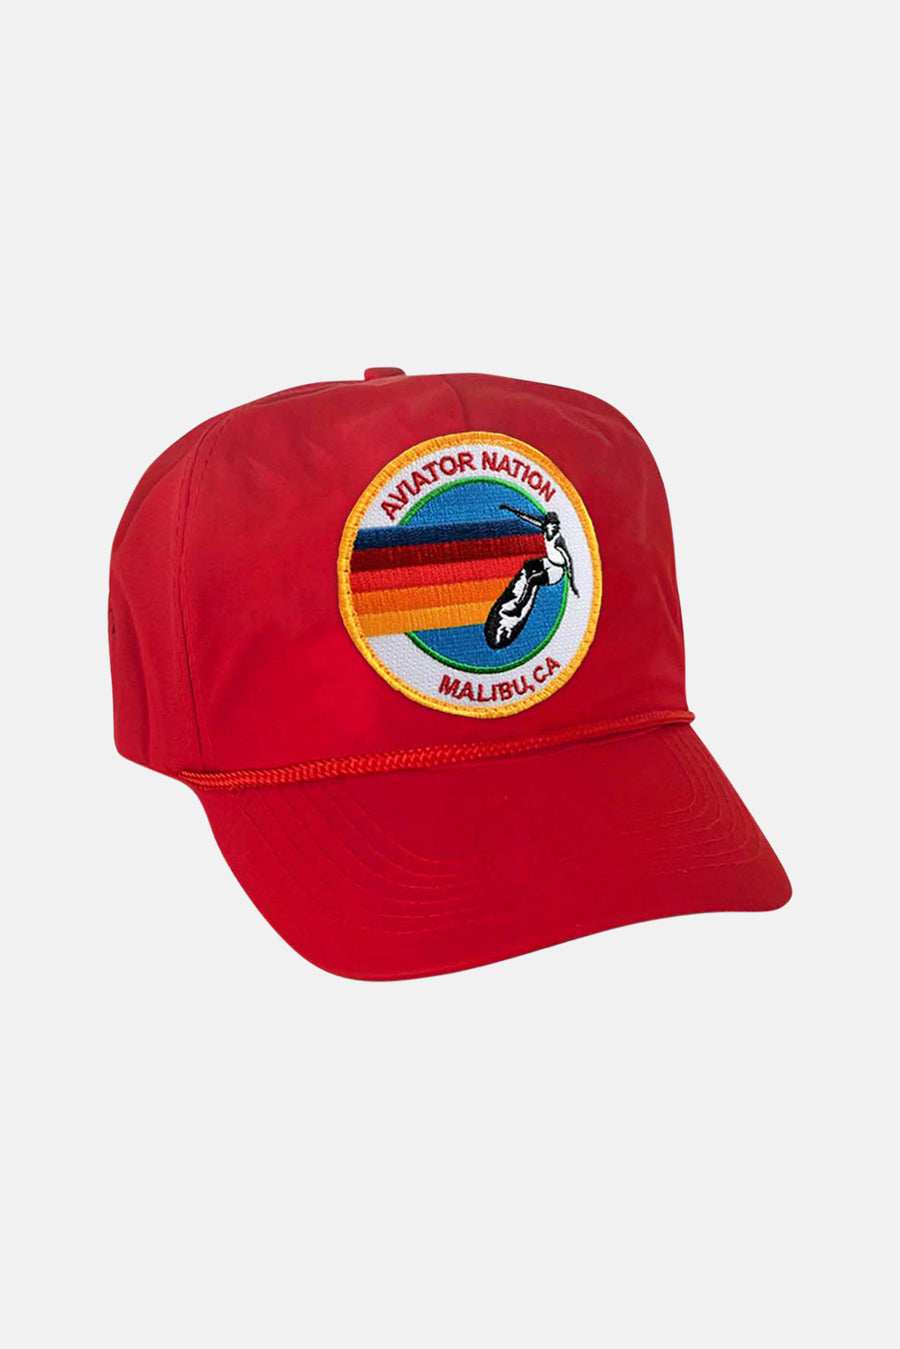 Signature Vintage Nylon Trucker Hat Red - blueandcream